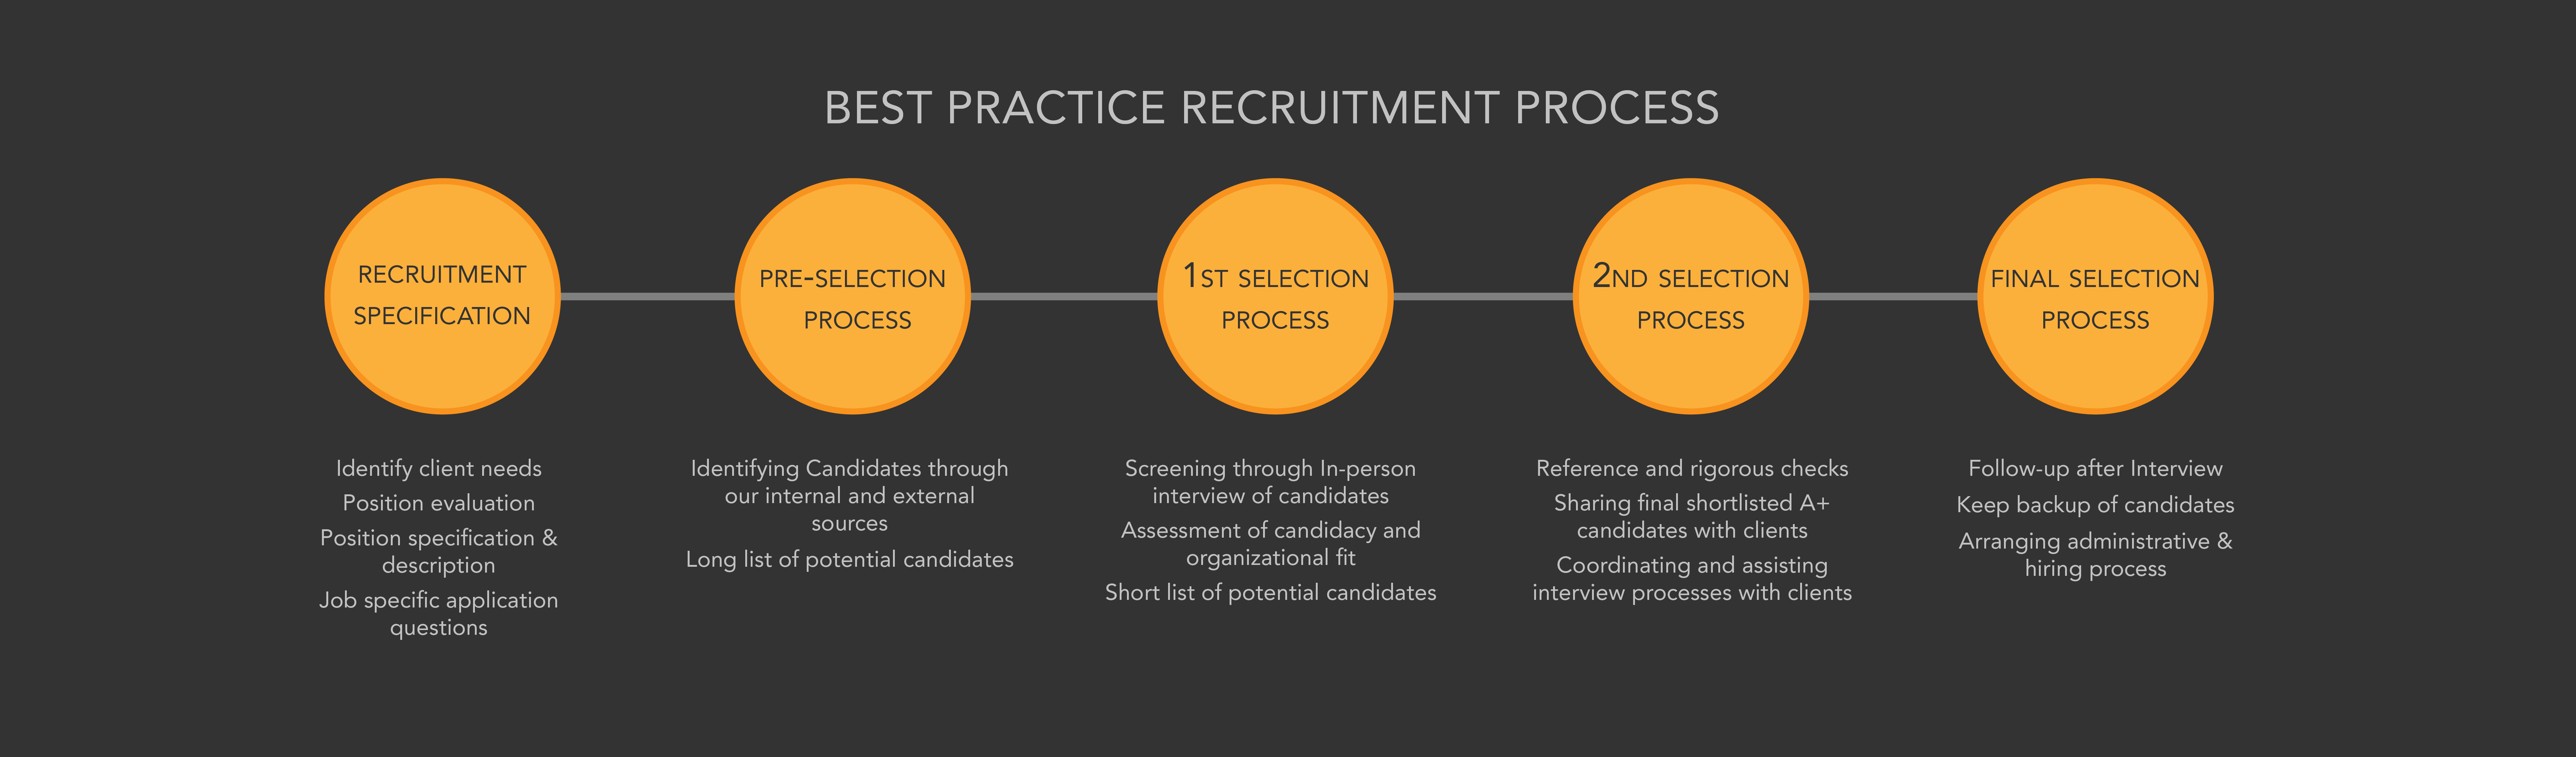 M&M Recruitmen Process